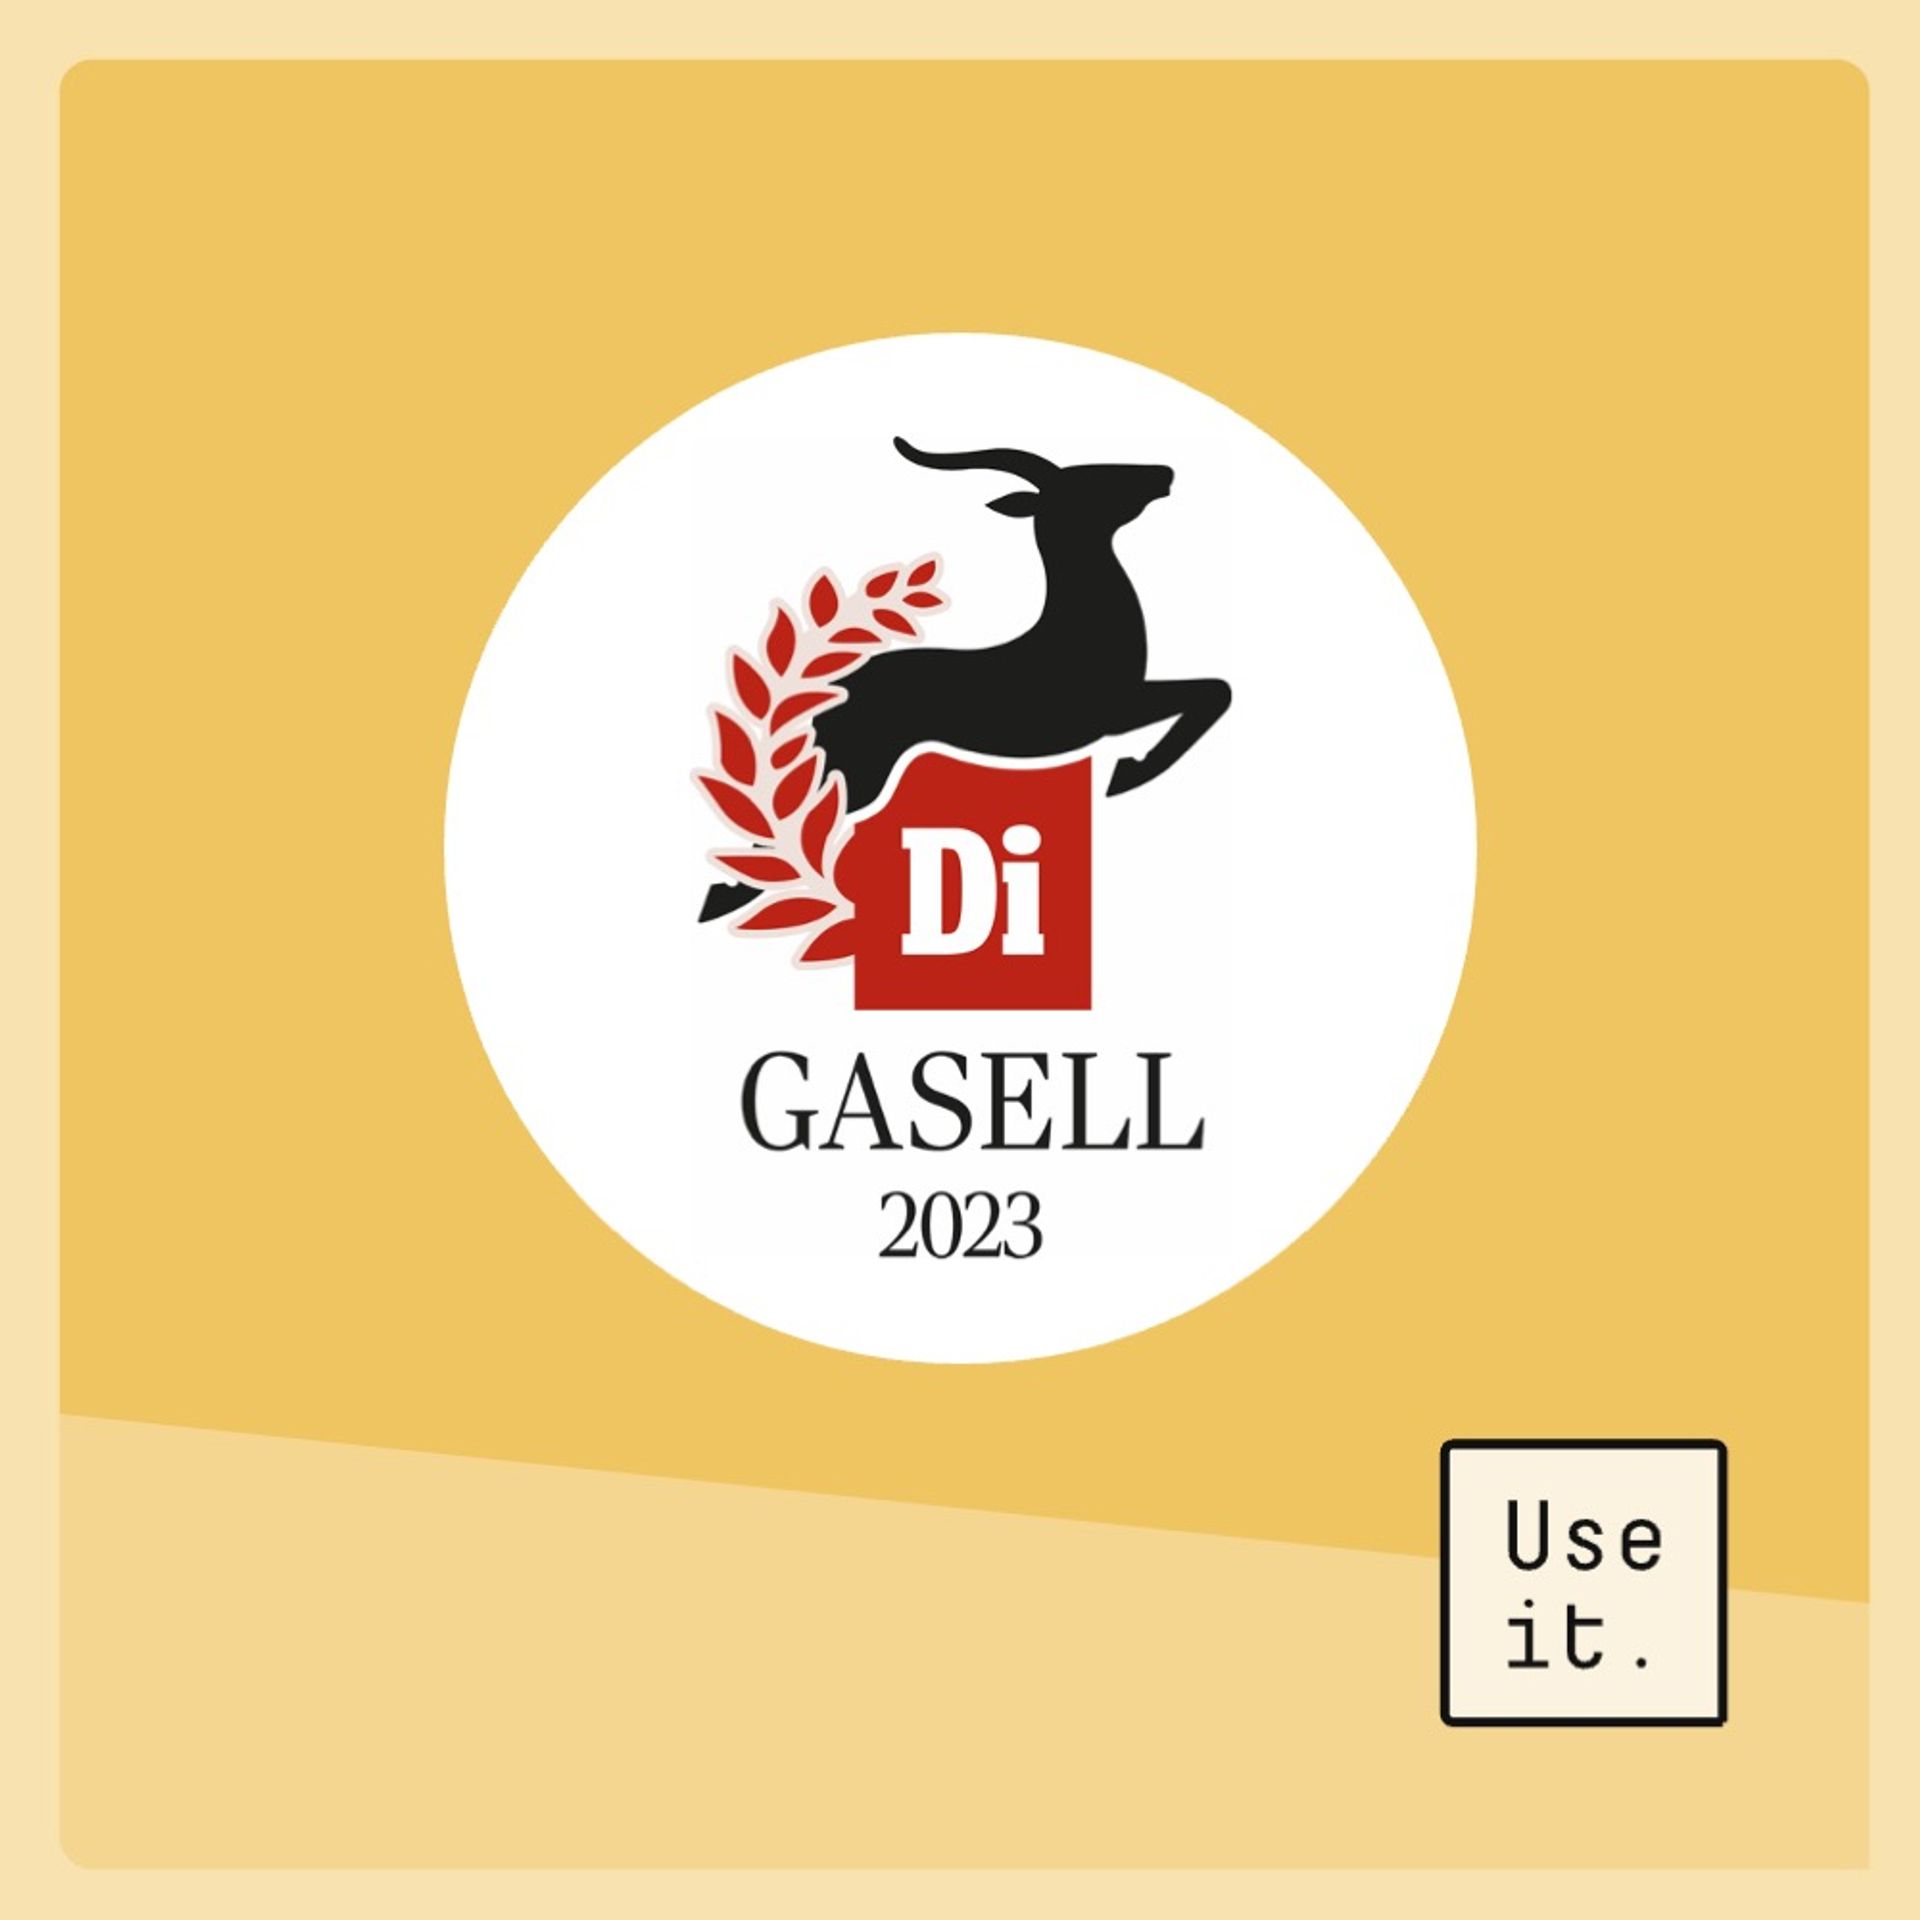 DI gasell emblem 2023.